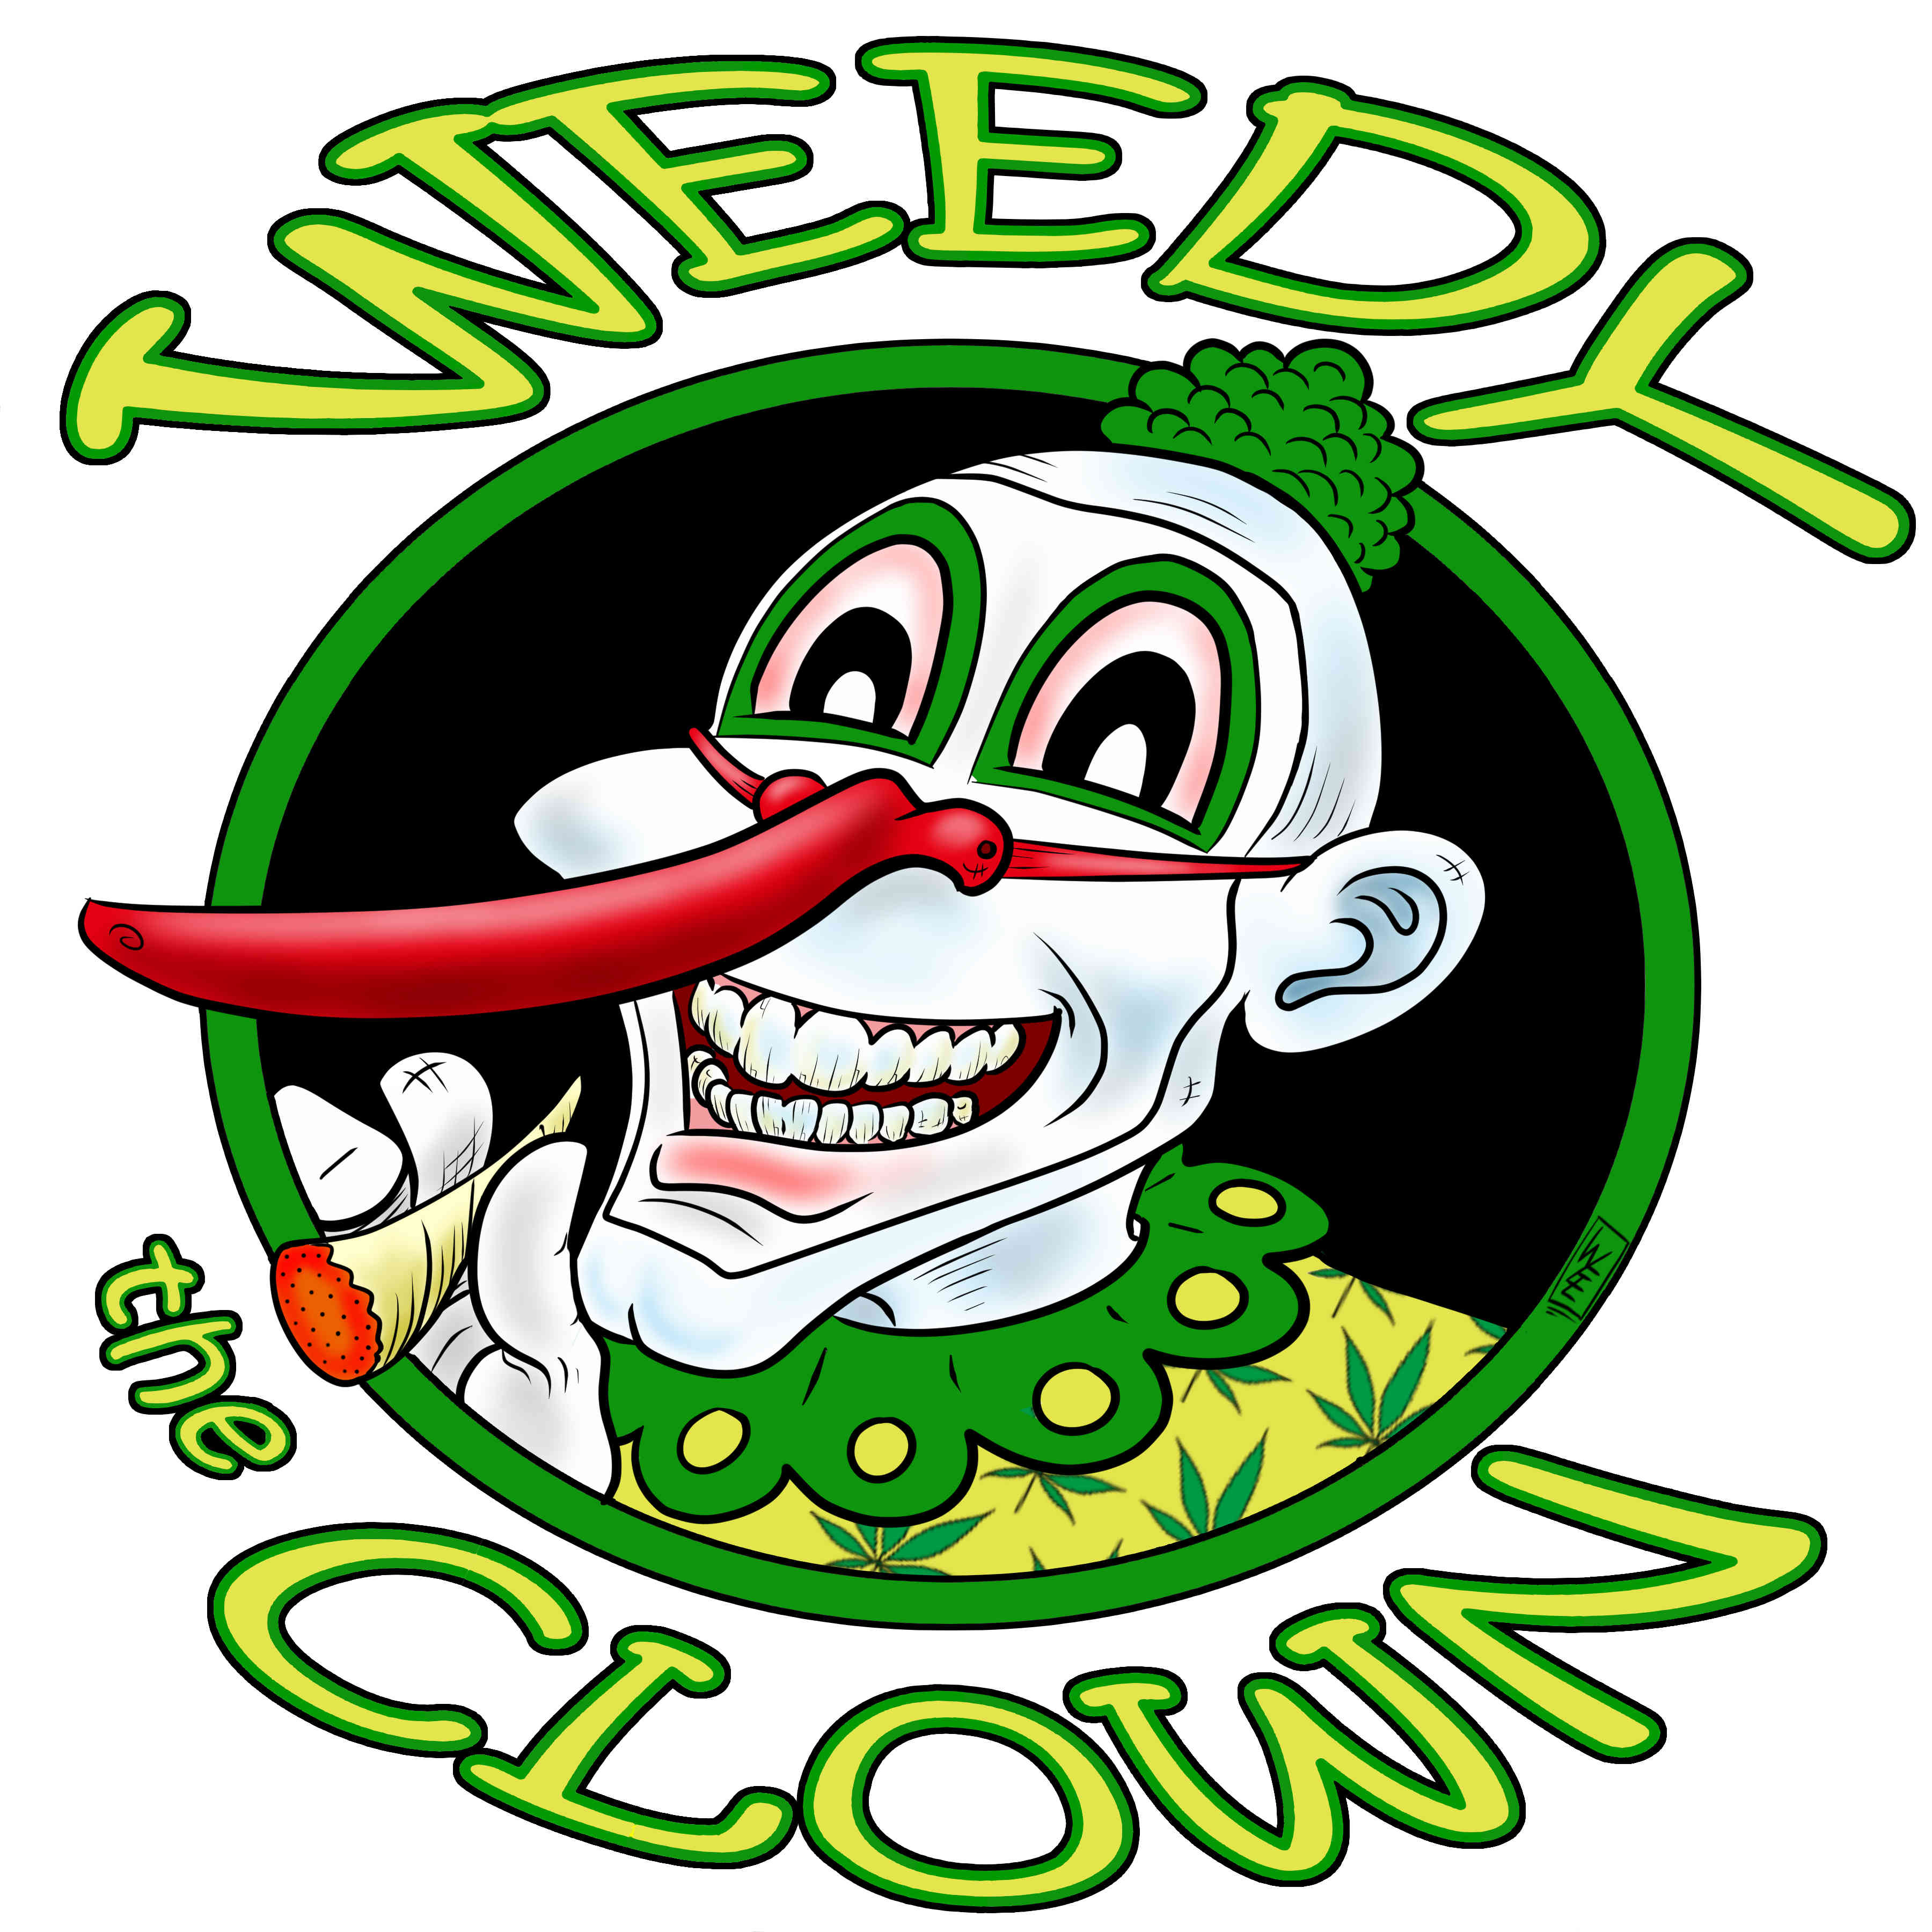 Weedy the Clown2